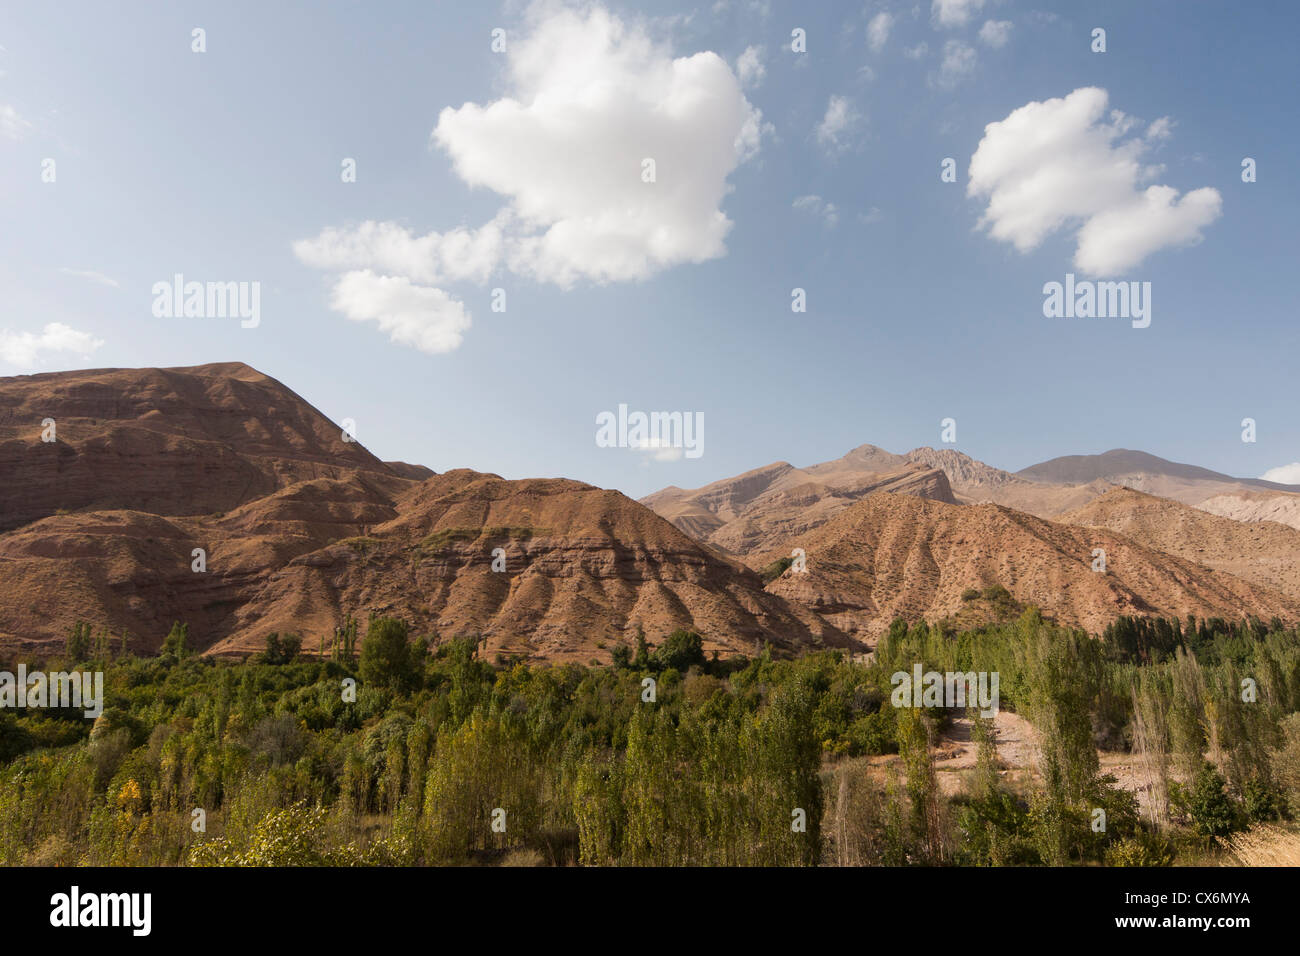 Landscape on sunny day along the Alamut valley, Iran Stock Photo